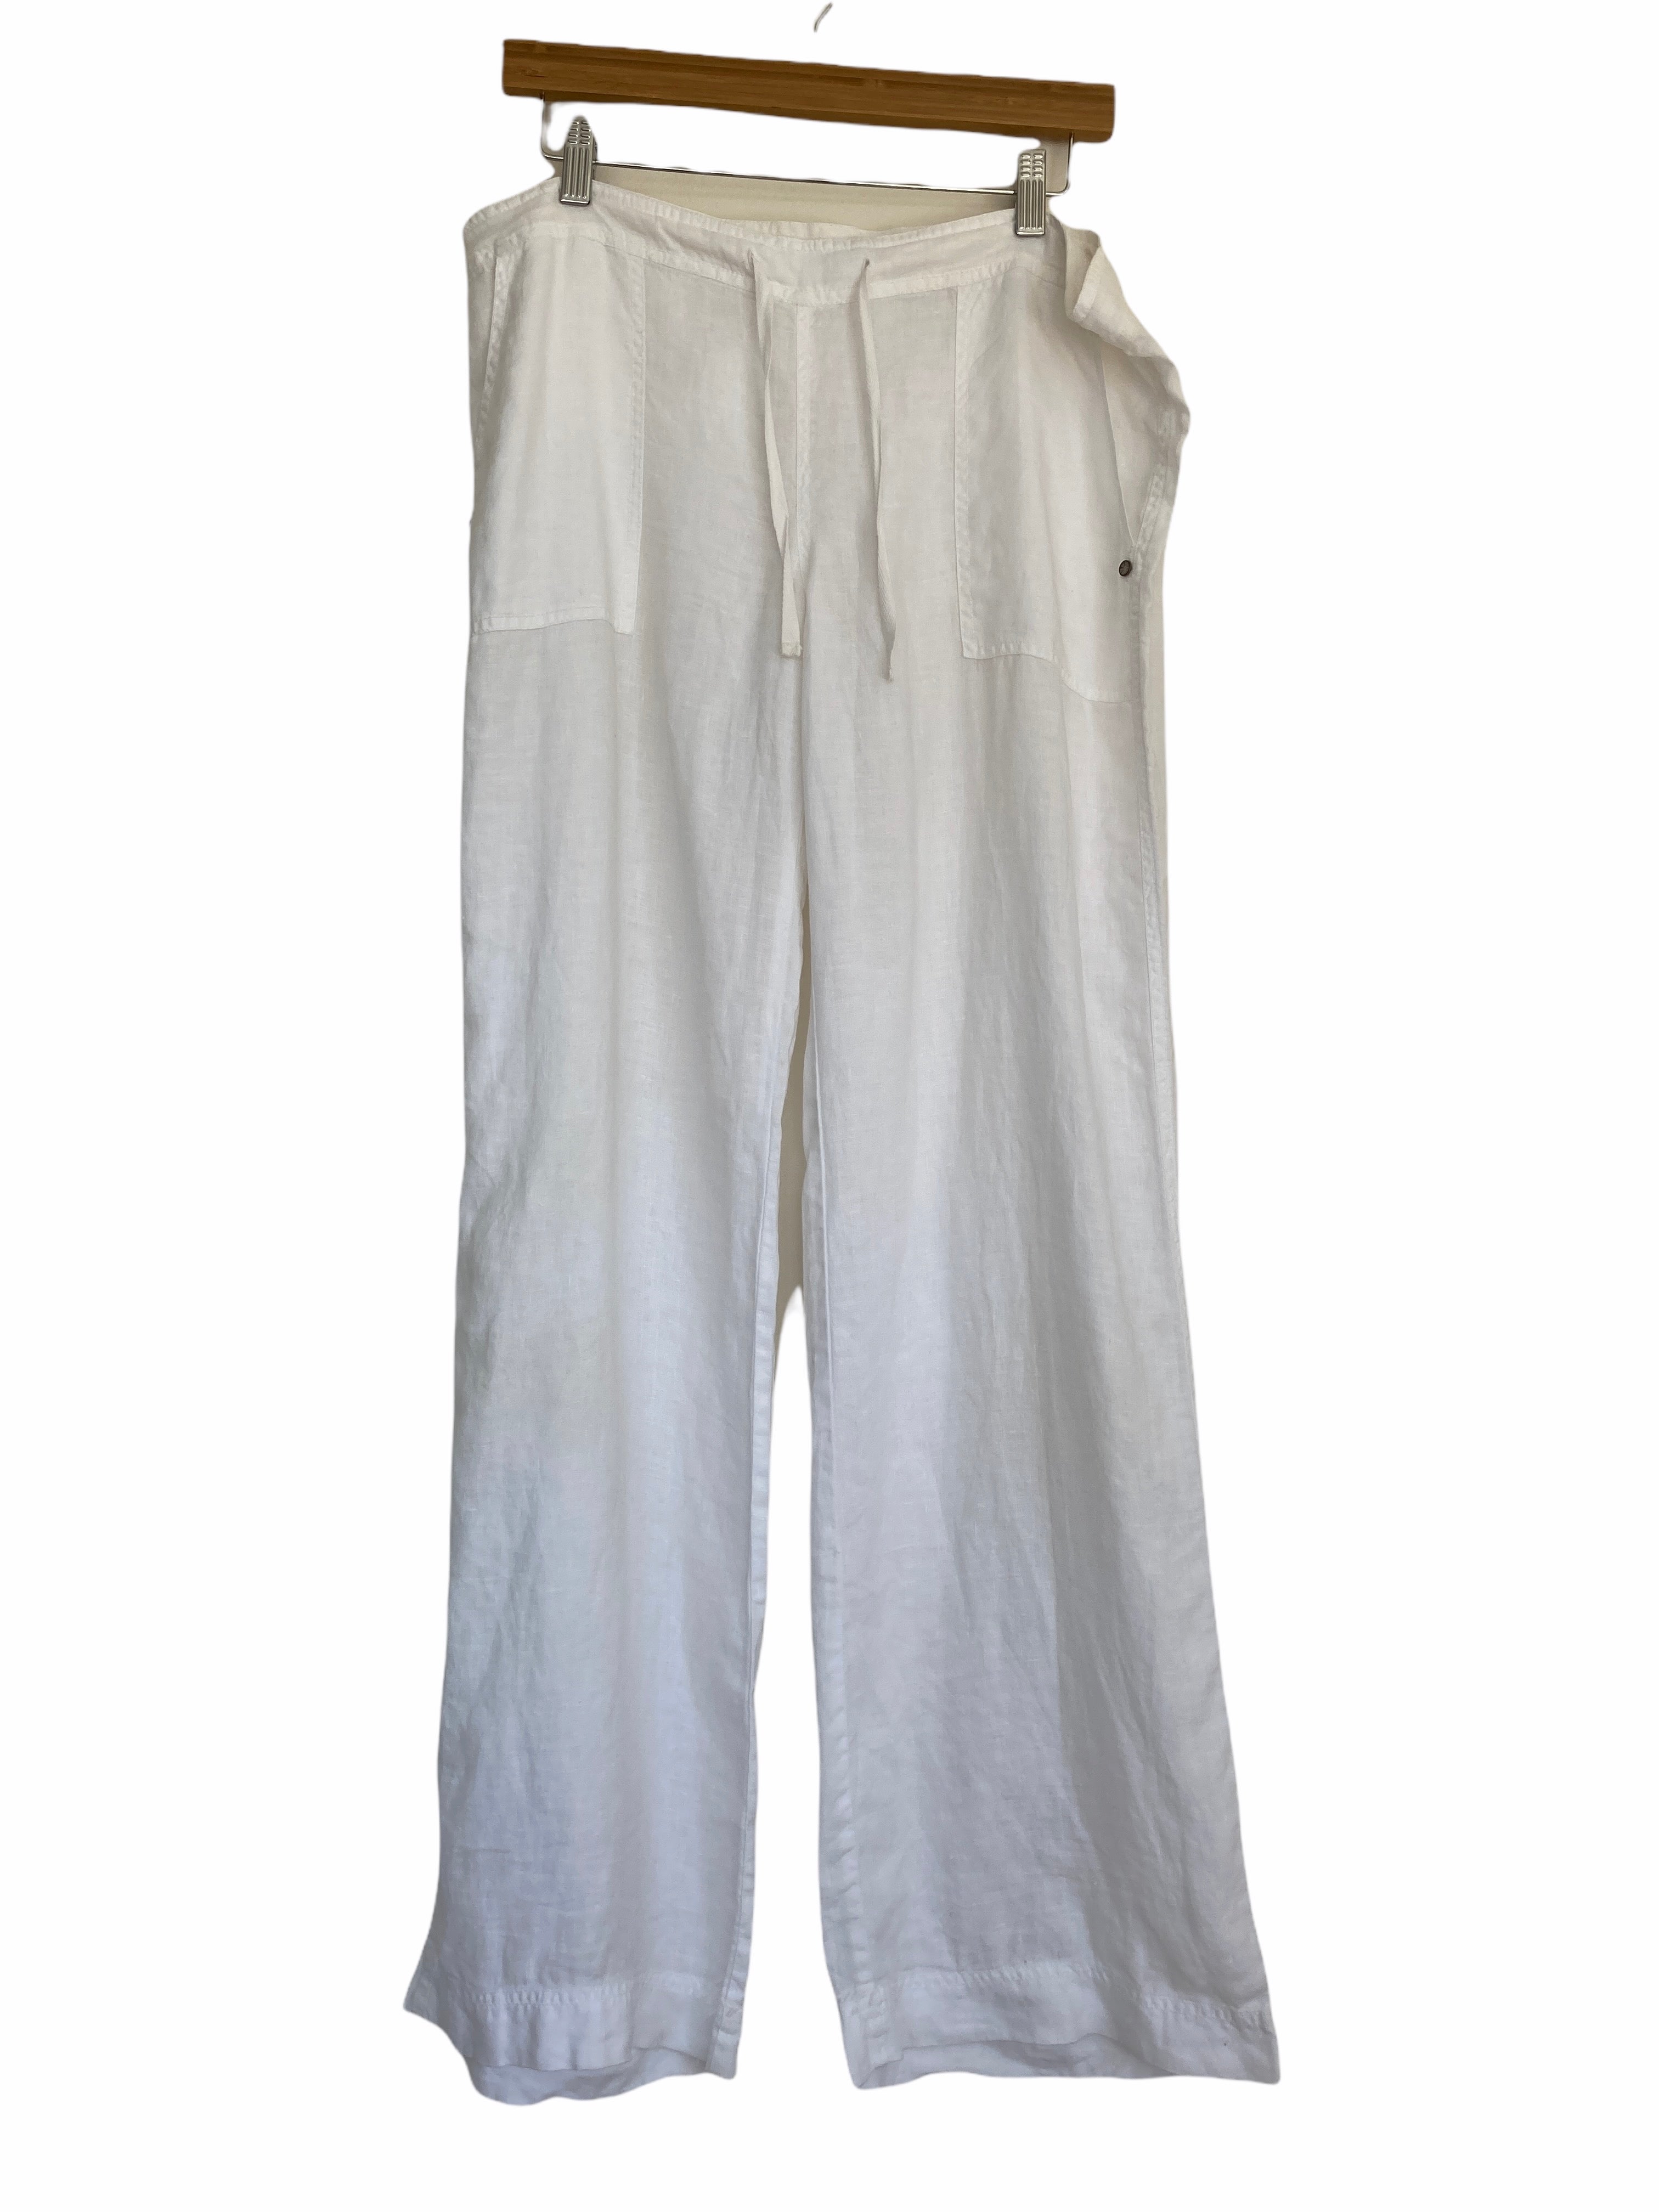 Michael Stars White Linen Pants, L